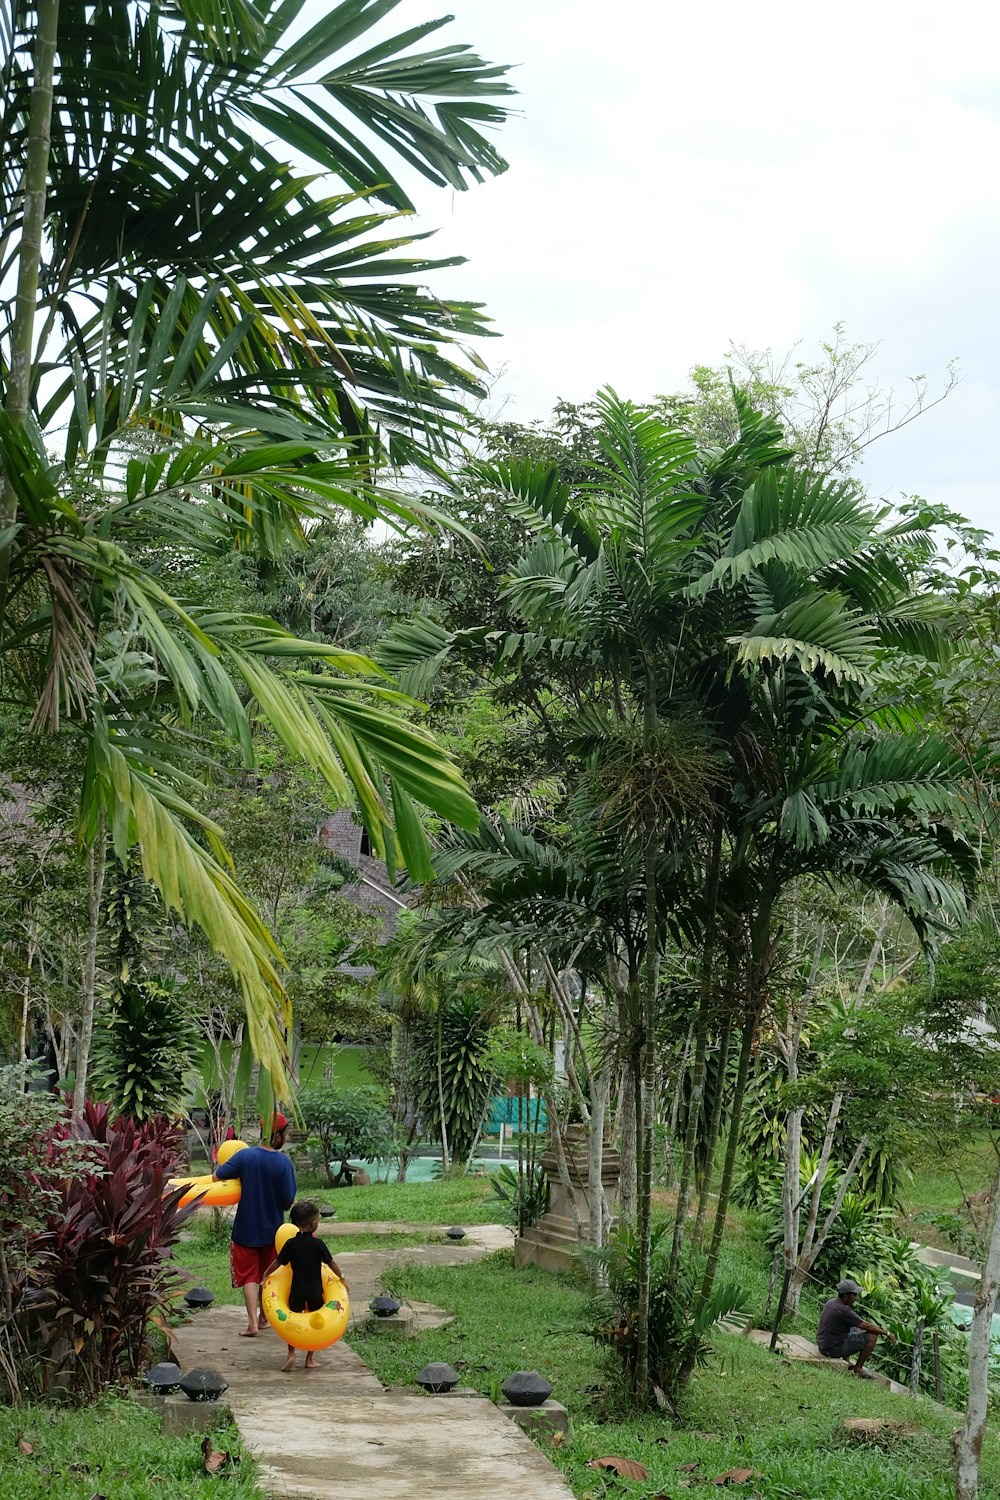 a person walking down a path in a tropical park